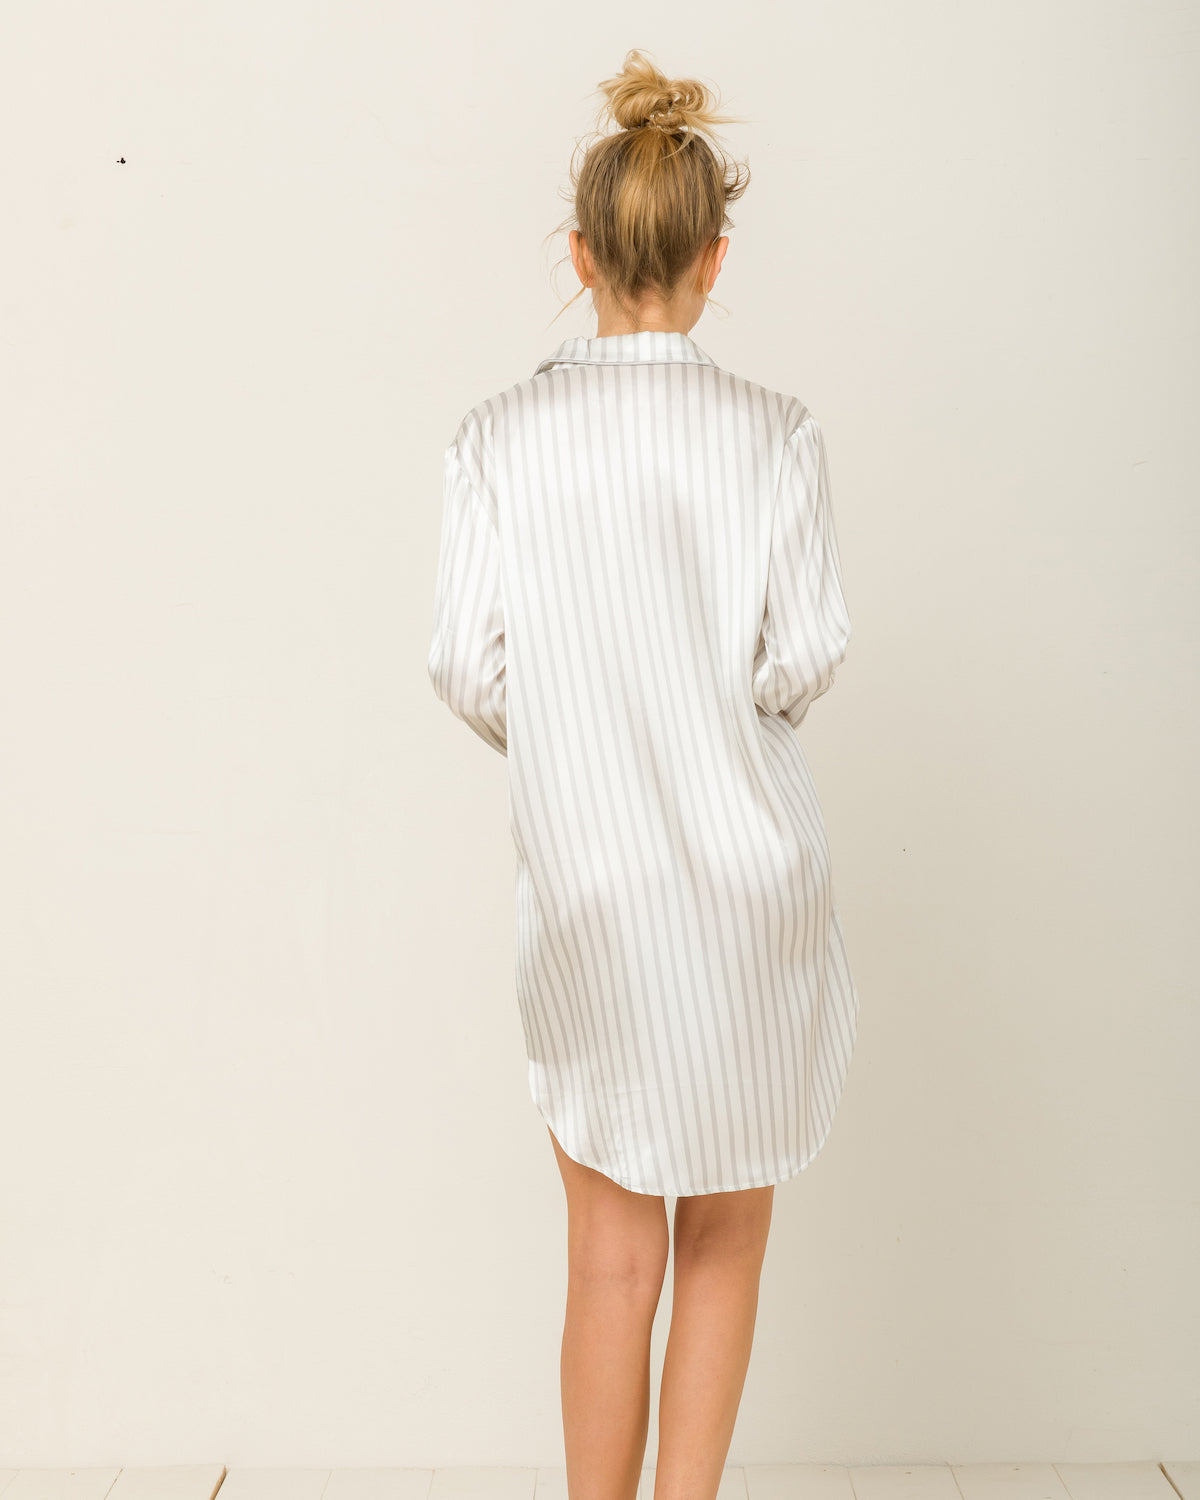 Camilla in Hiatu Grey Stripes - Nightshirt Loungewear, Pyjama, Seidenpyjama, Schlafanzug | RADICE